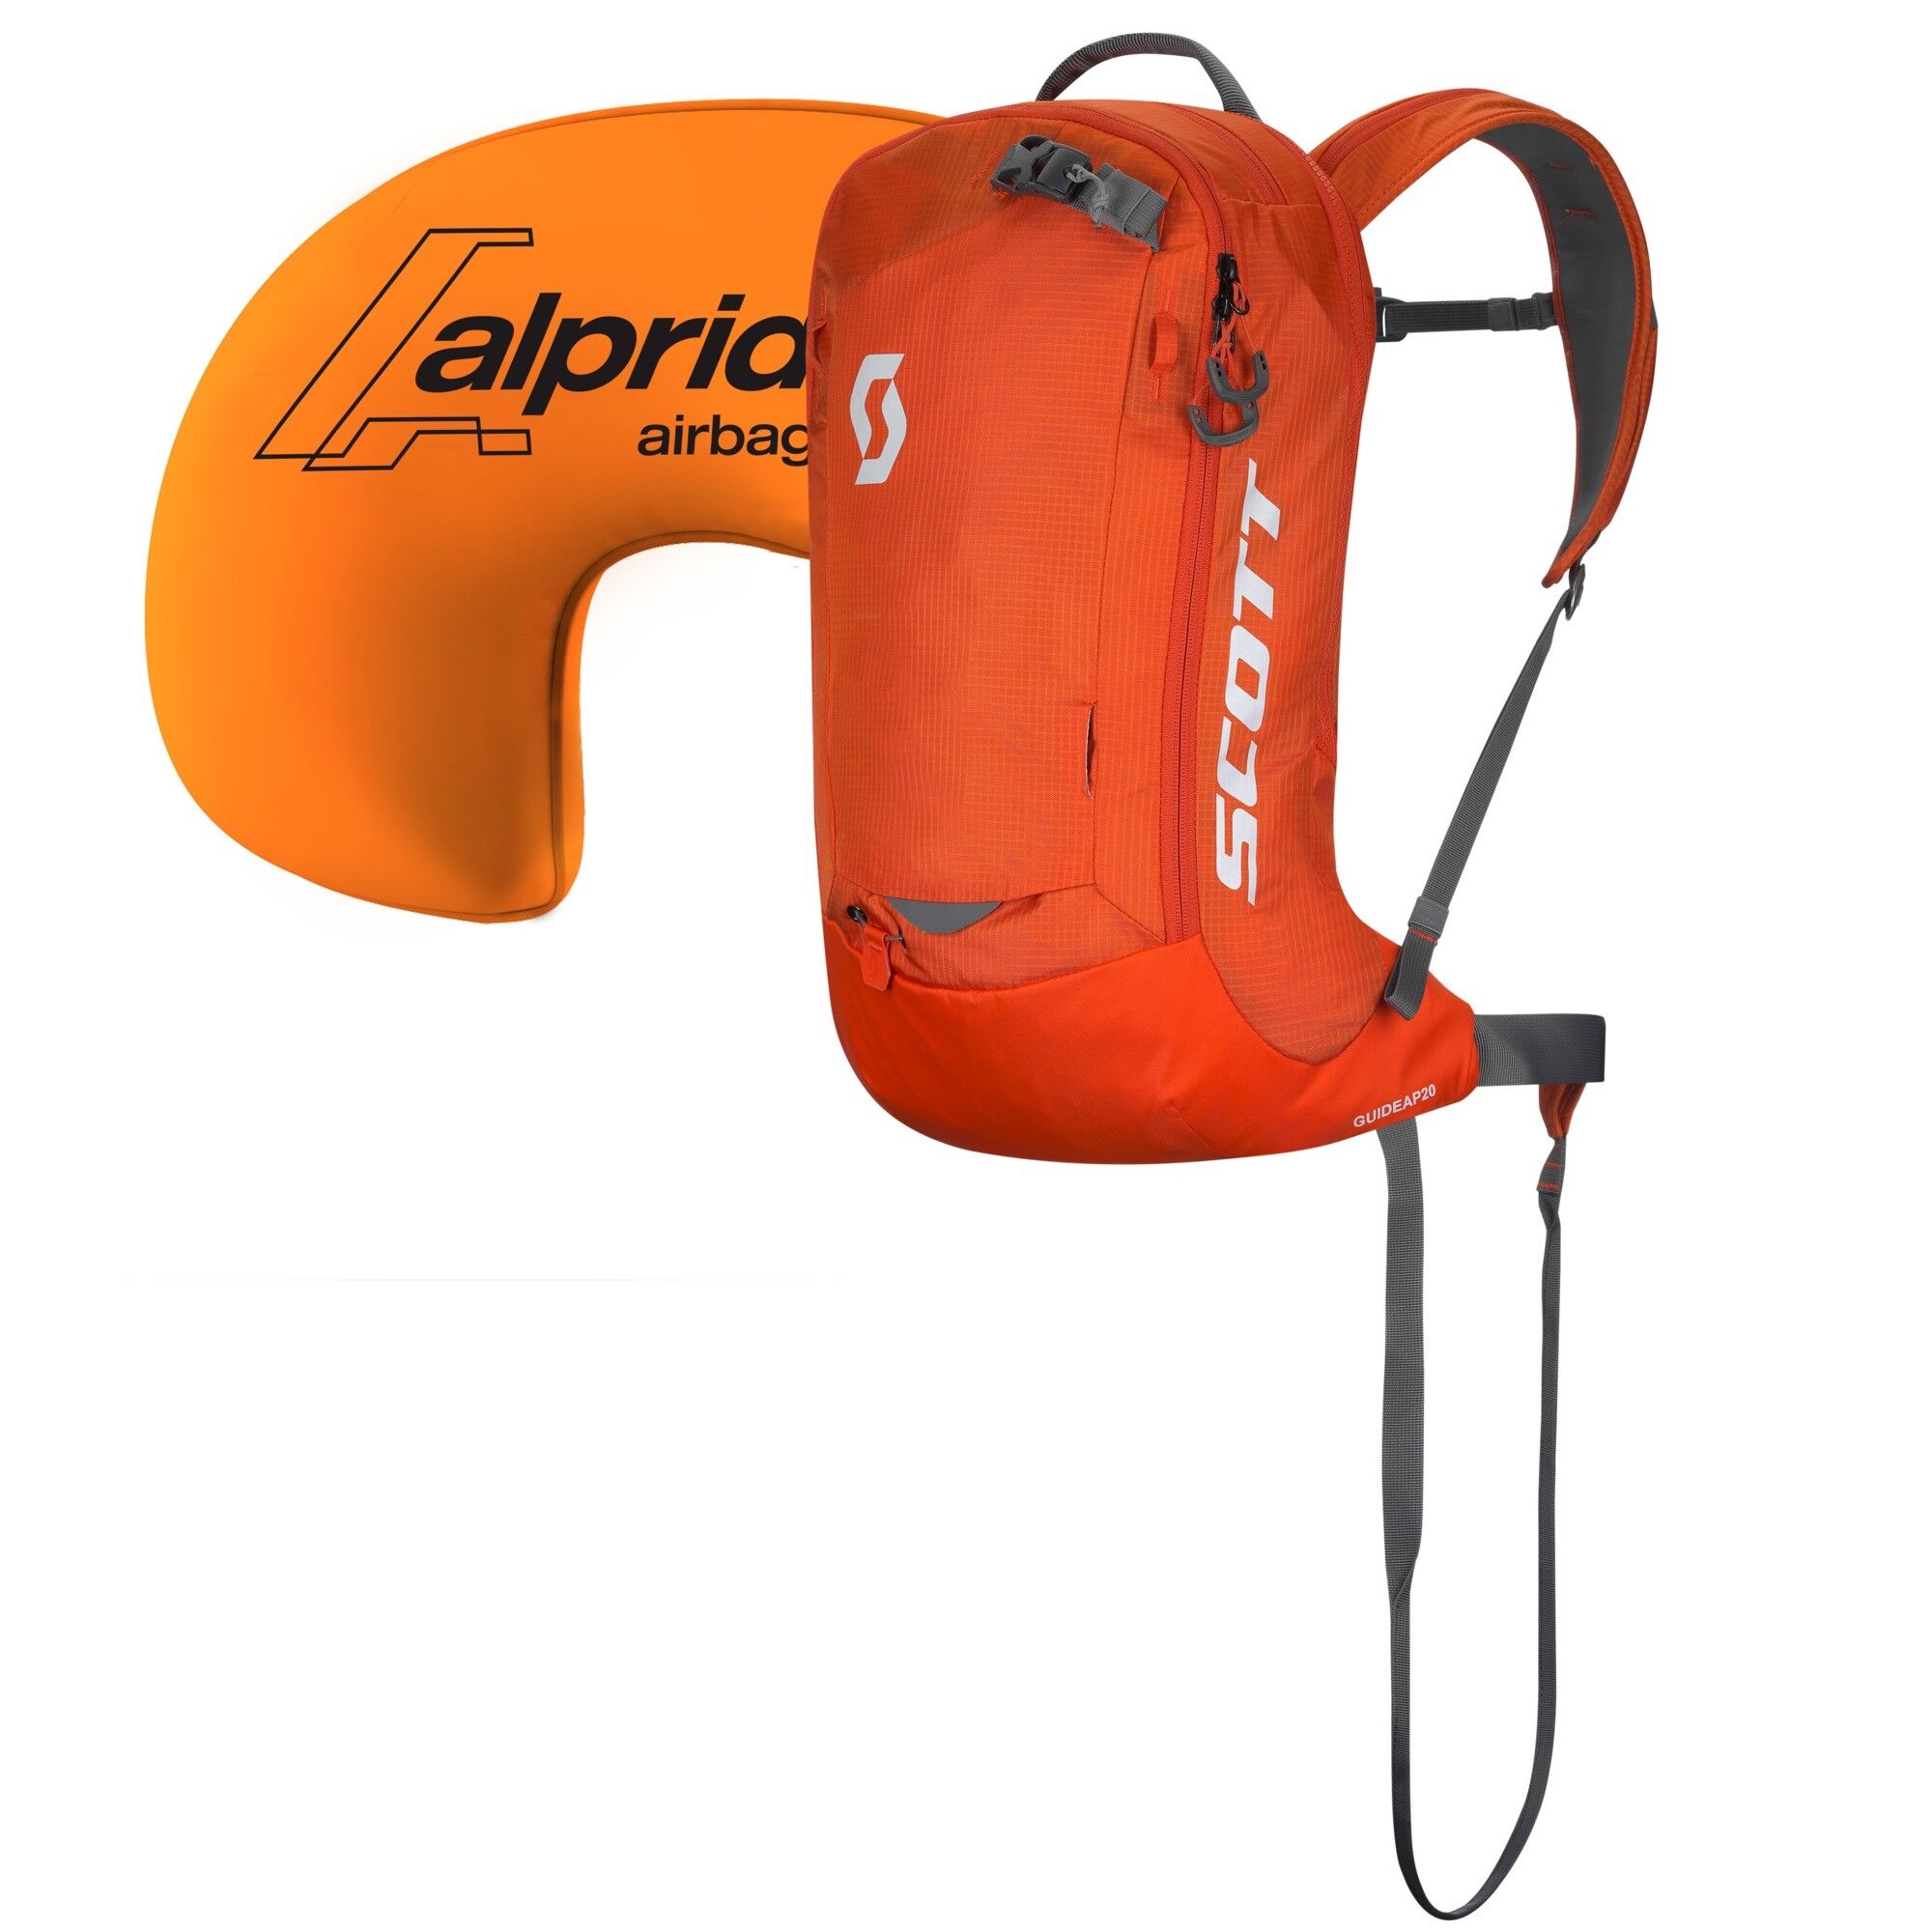 Scott Guide AP 20 Kit - Avalanche airbag backpack